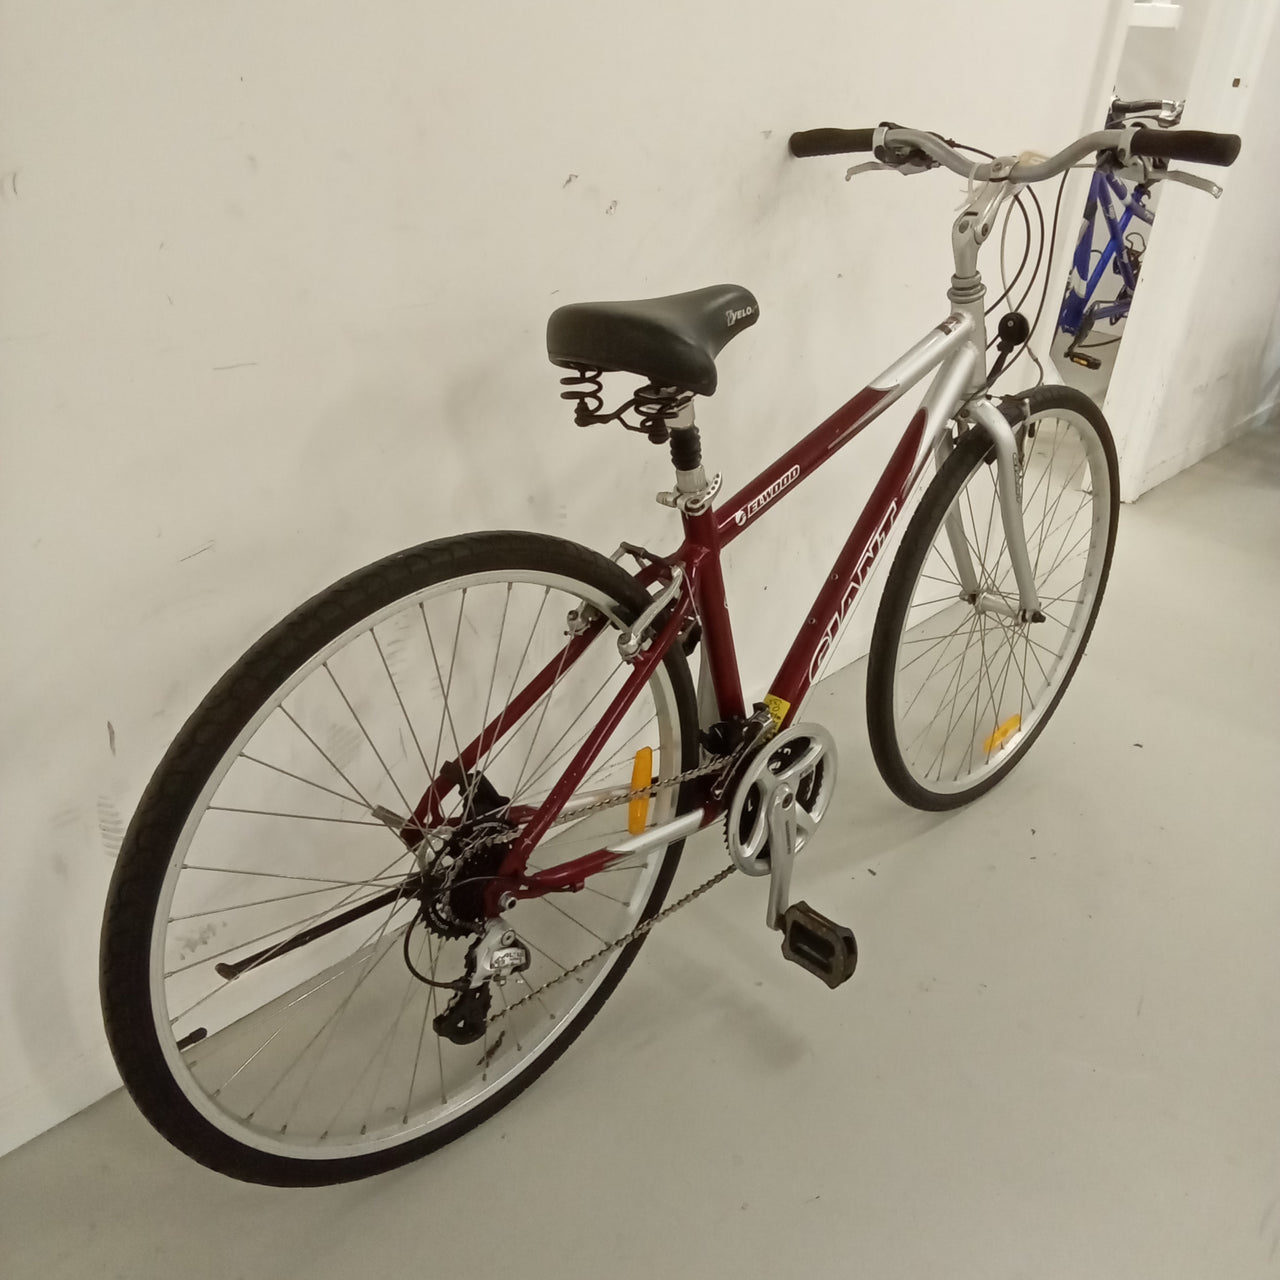 1803 - 44cm Silver,
Red, Flat Bar Commuter, Bike